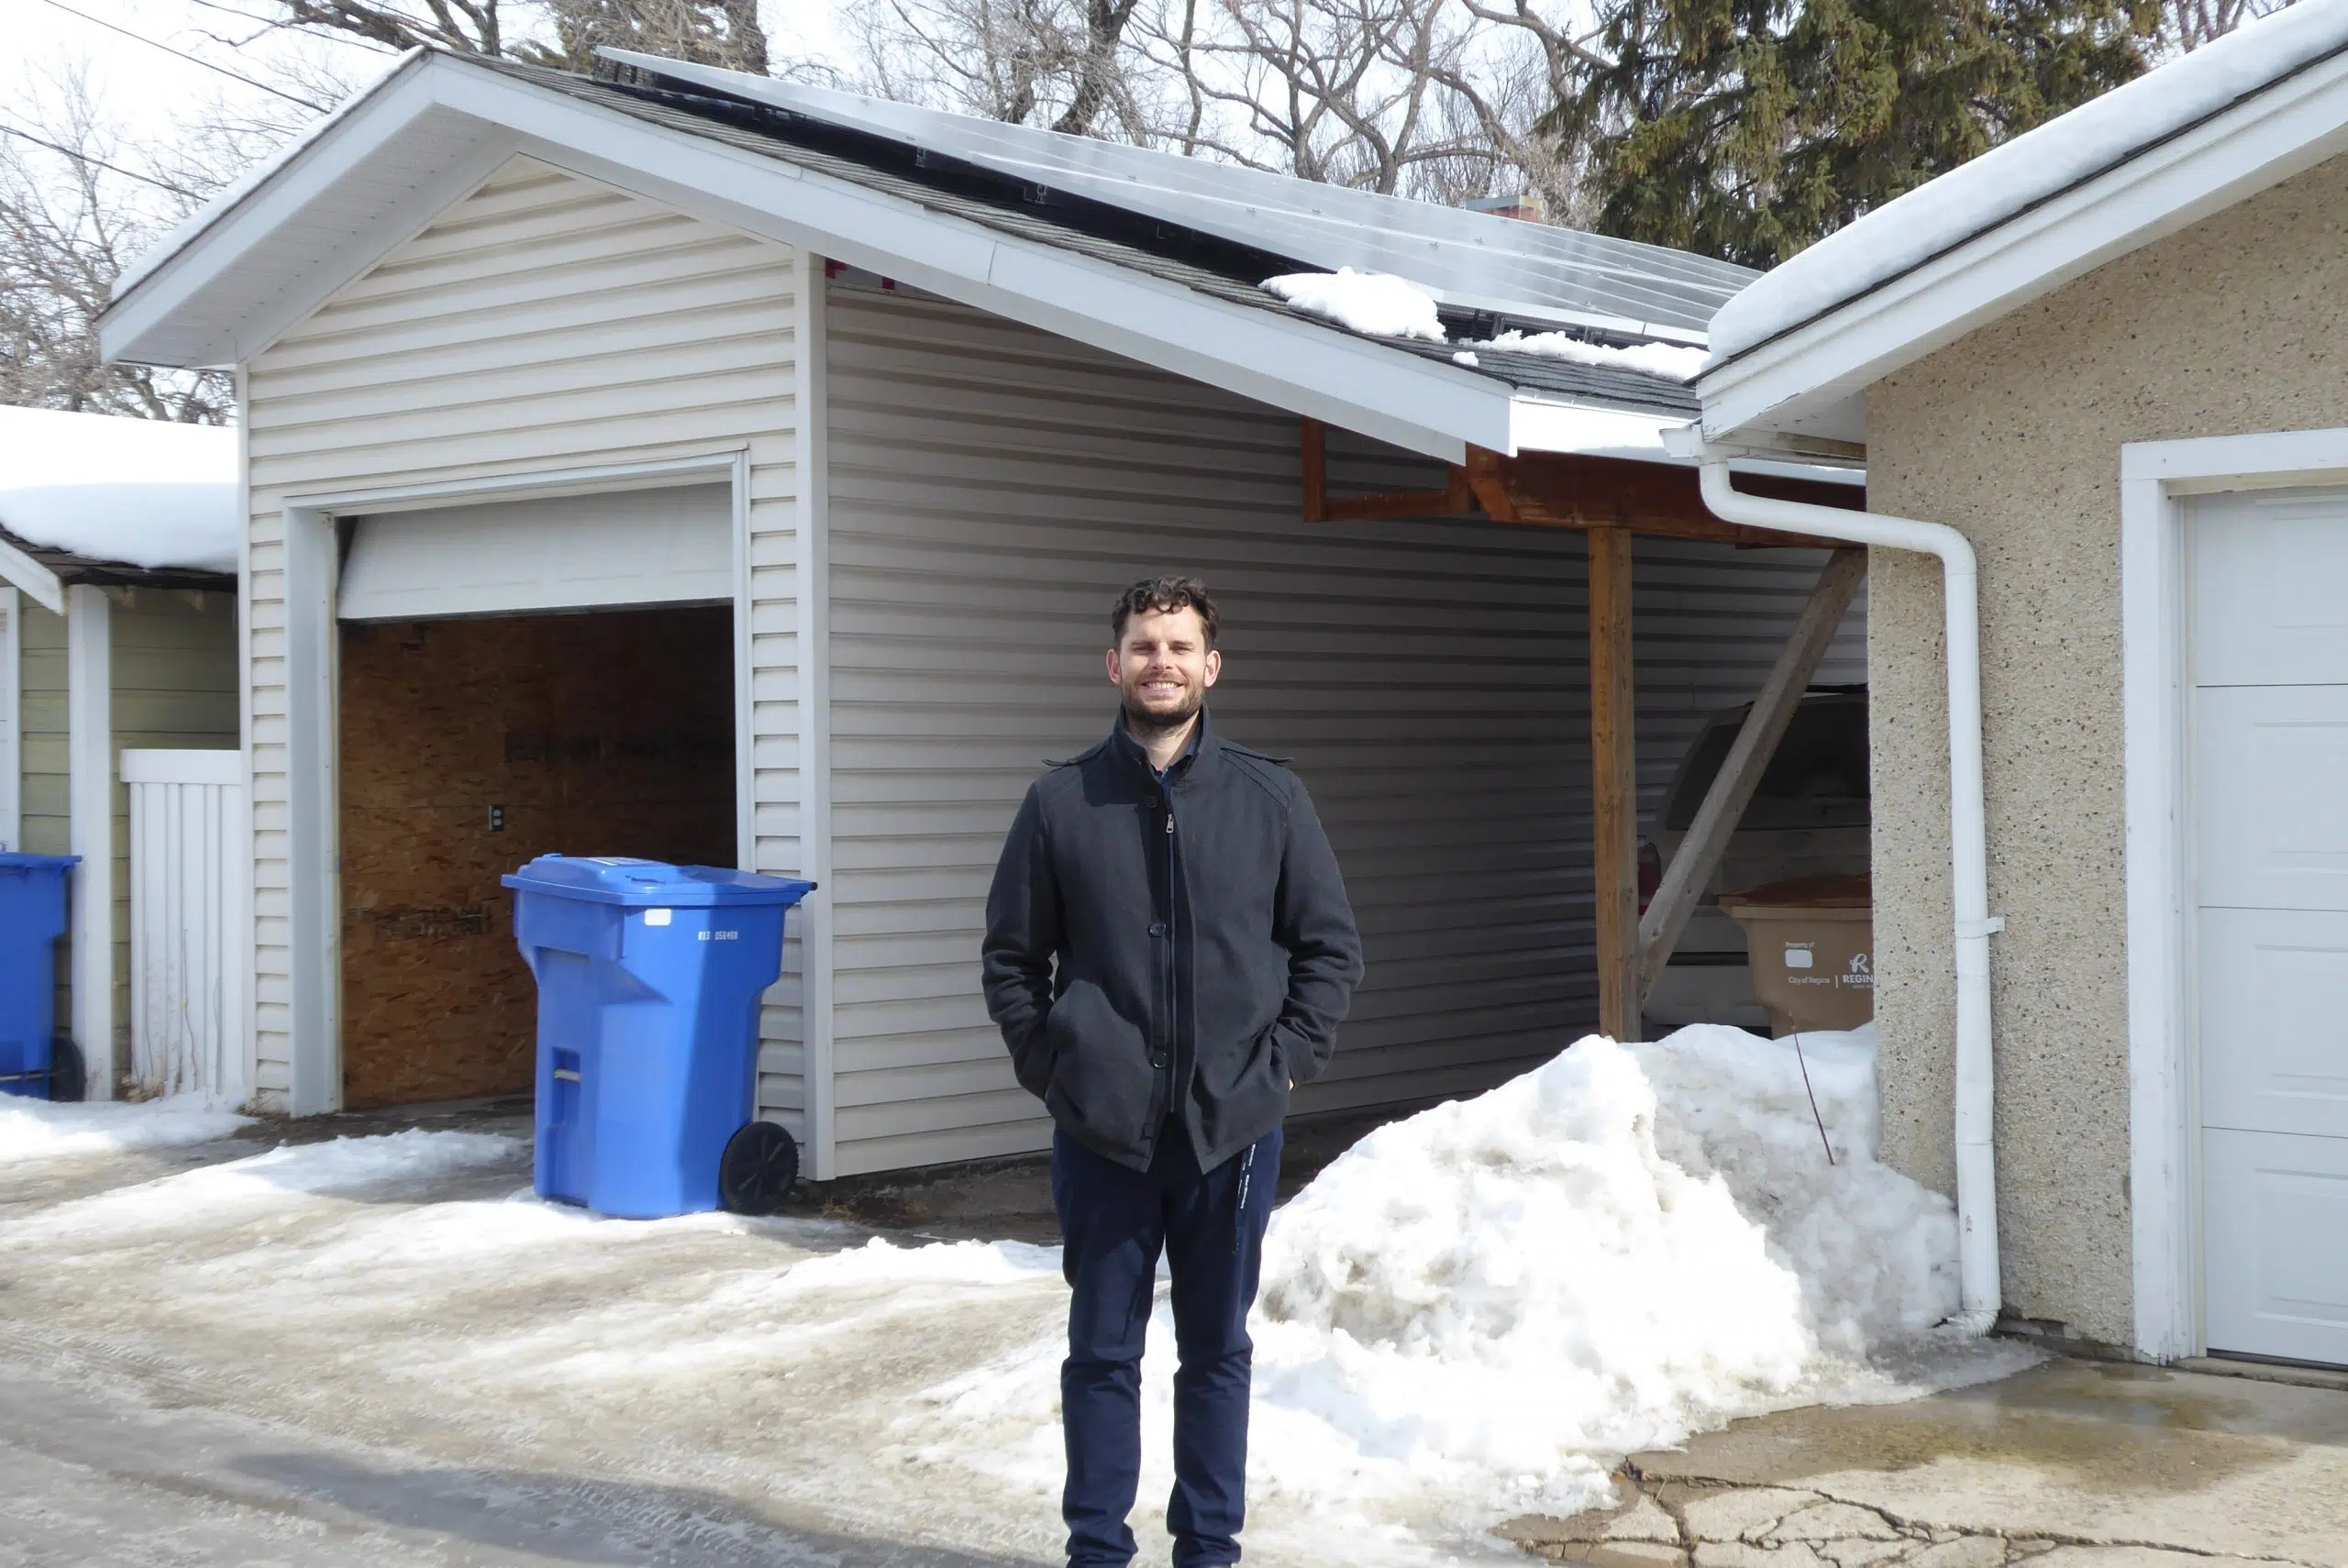 Local group making solar panels affordable for Reginans